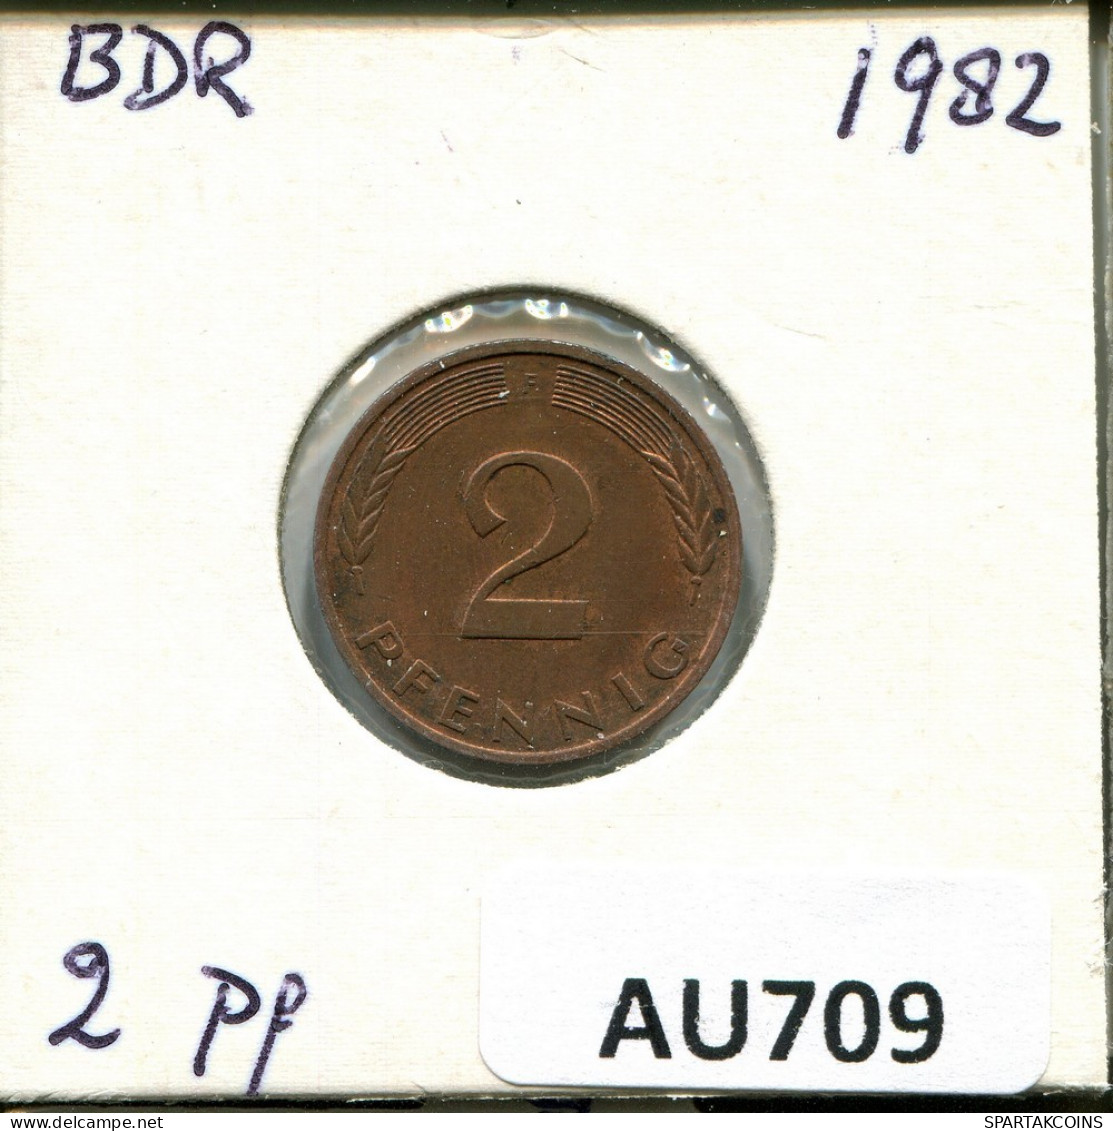 2 PFENNIG 1982 F BRD DEUTSCHLAND Münze GERMANY #AU709.D.A - 2 Pfennig